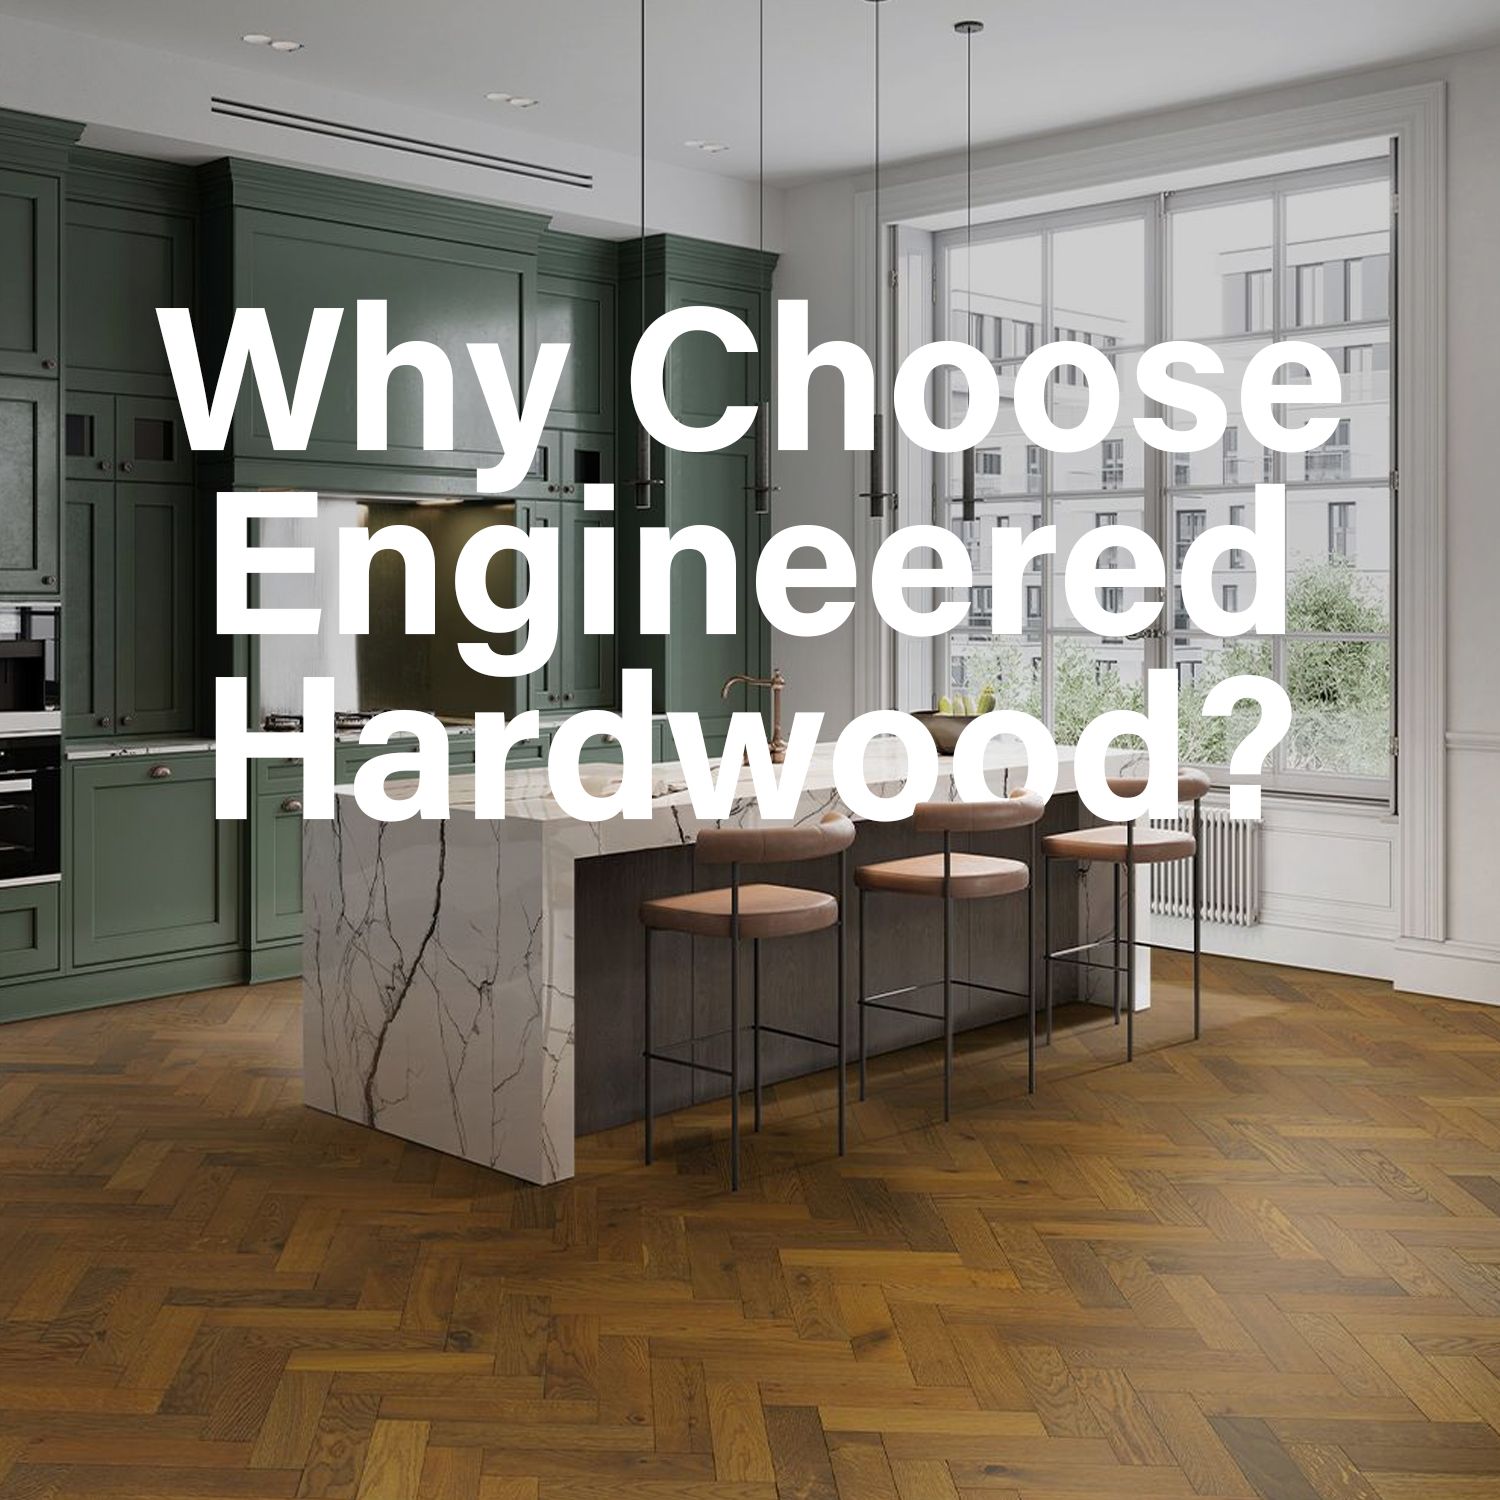 Reasons to choose engineered hardwood flooring